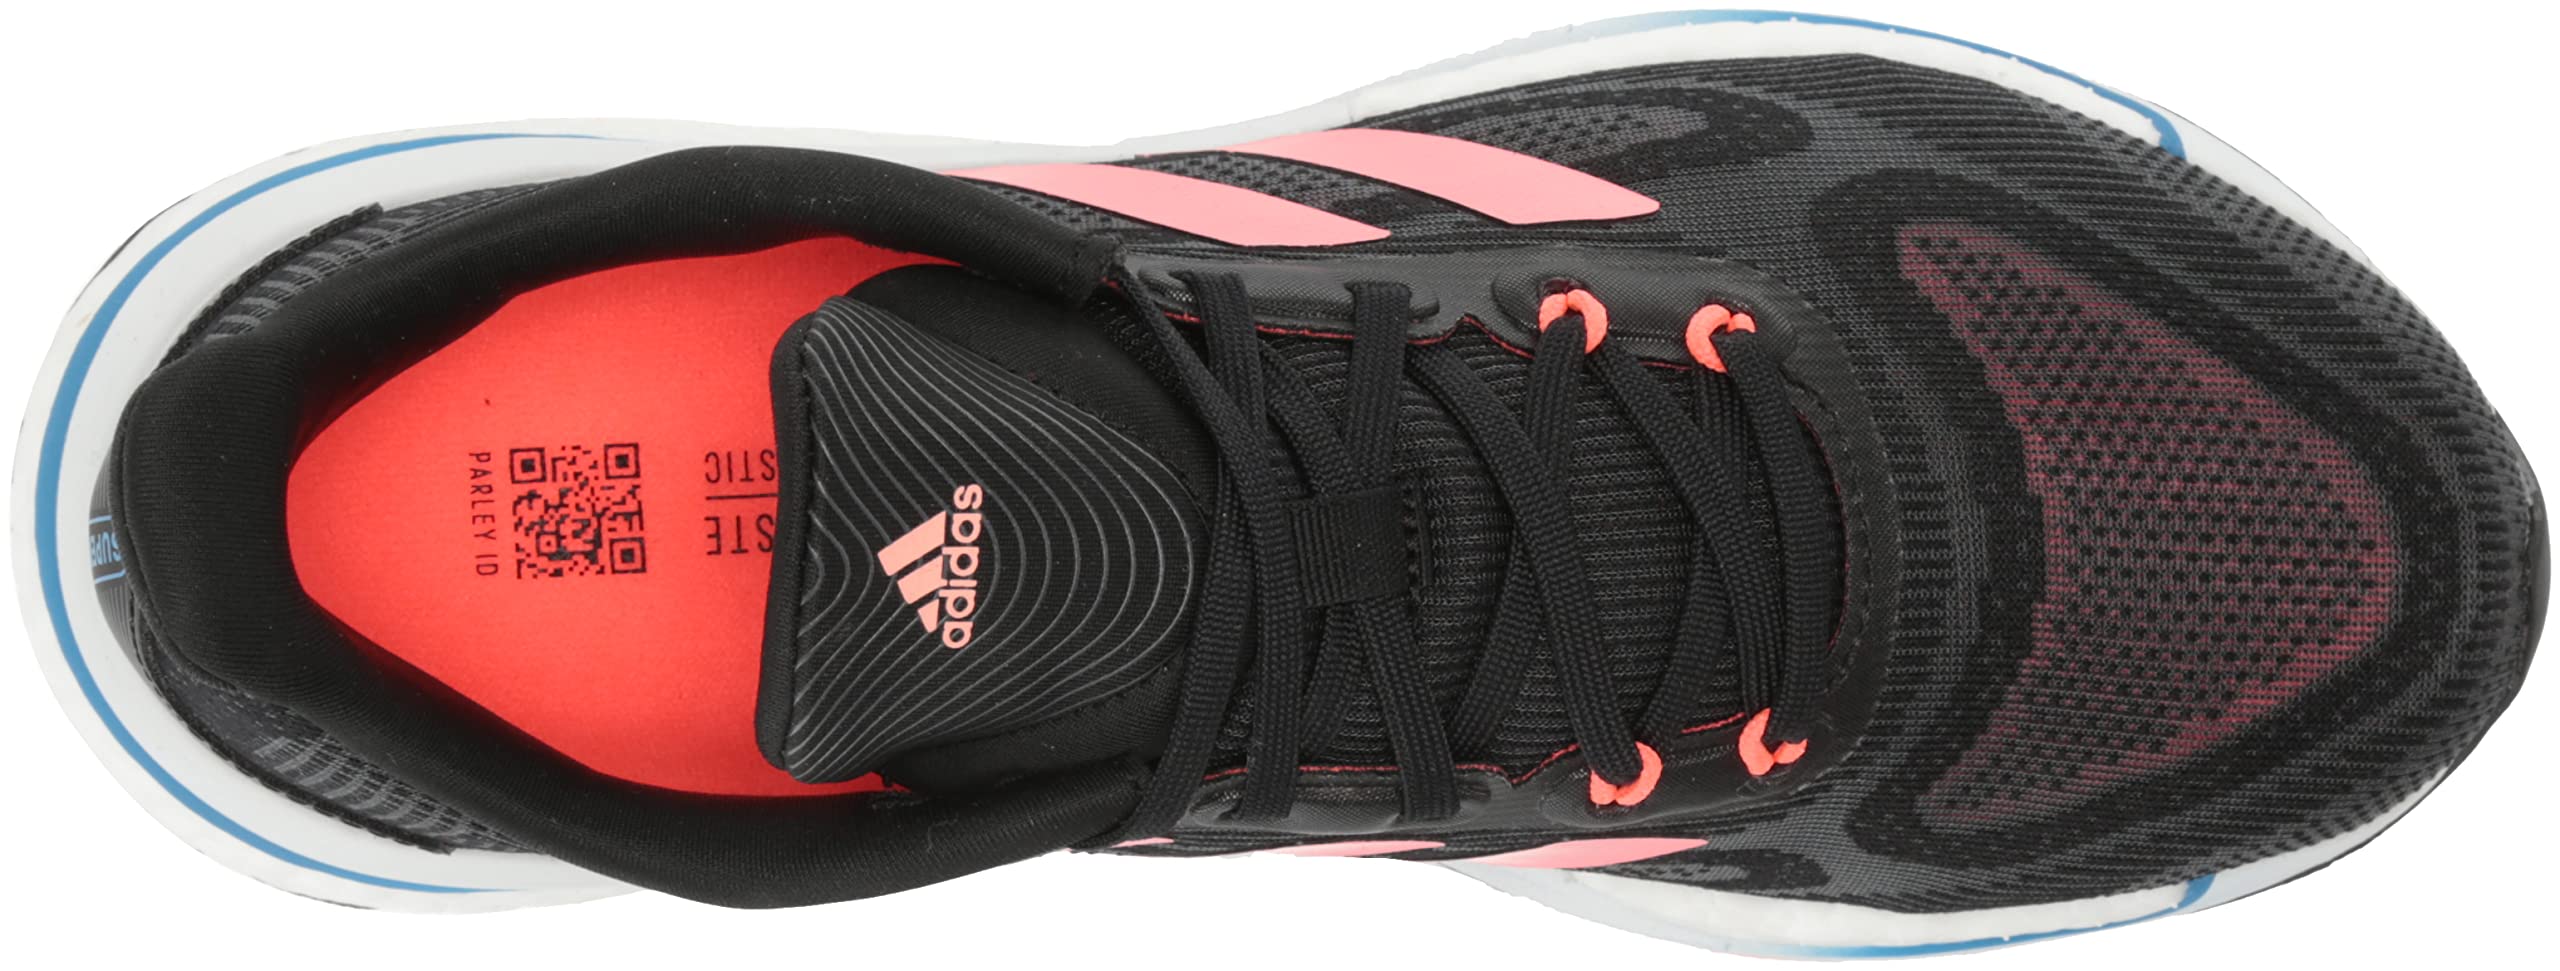 adidas Women's Supernova Running Shoe